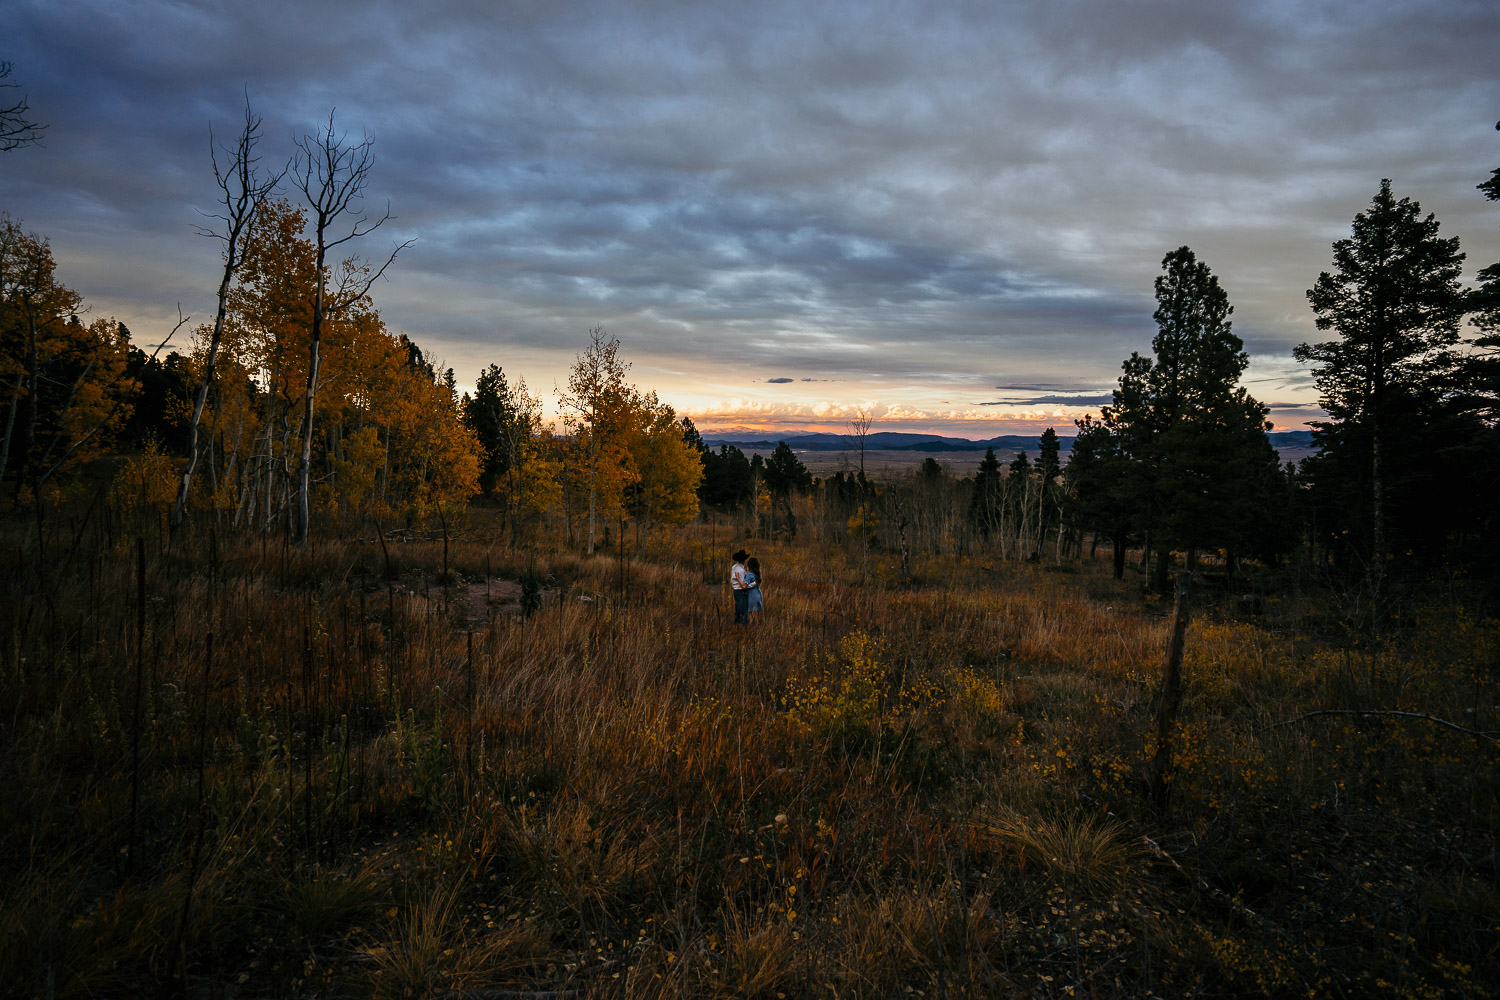 Fall Adventure Session, Alvarado Campground, Westcliff Colorado, Hillside Colorado, Autumn, Colorado Engagement Photography, Colorado Couples Photographer, Elopement